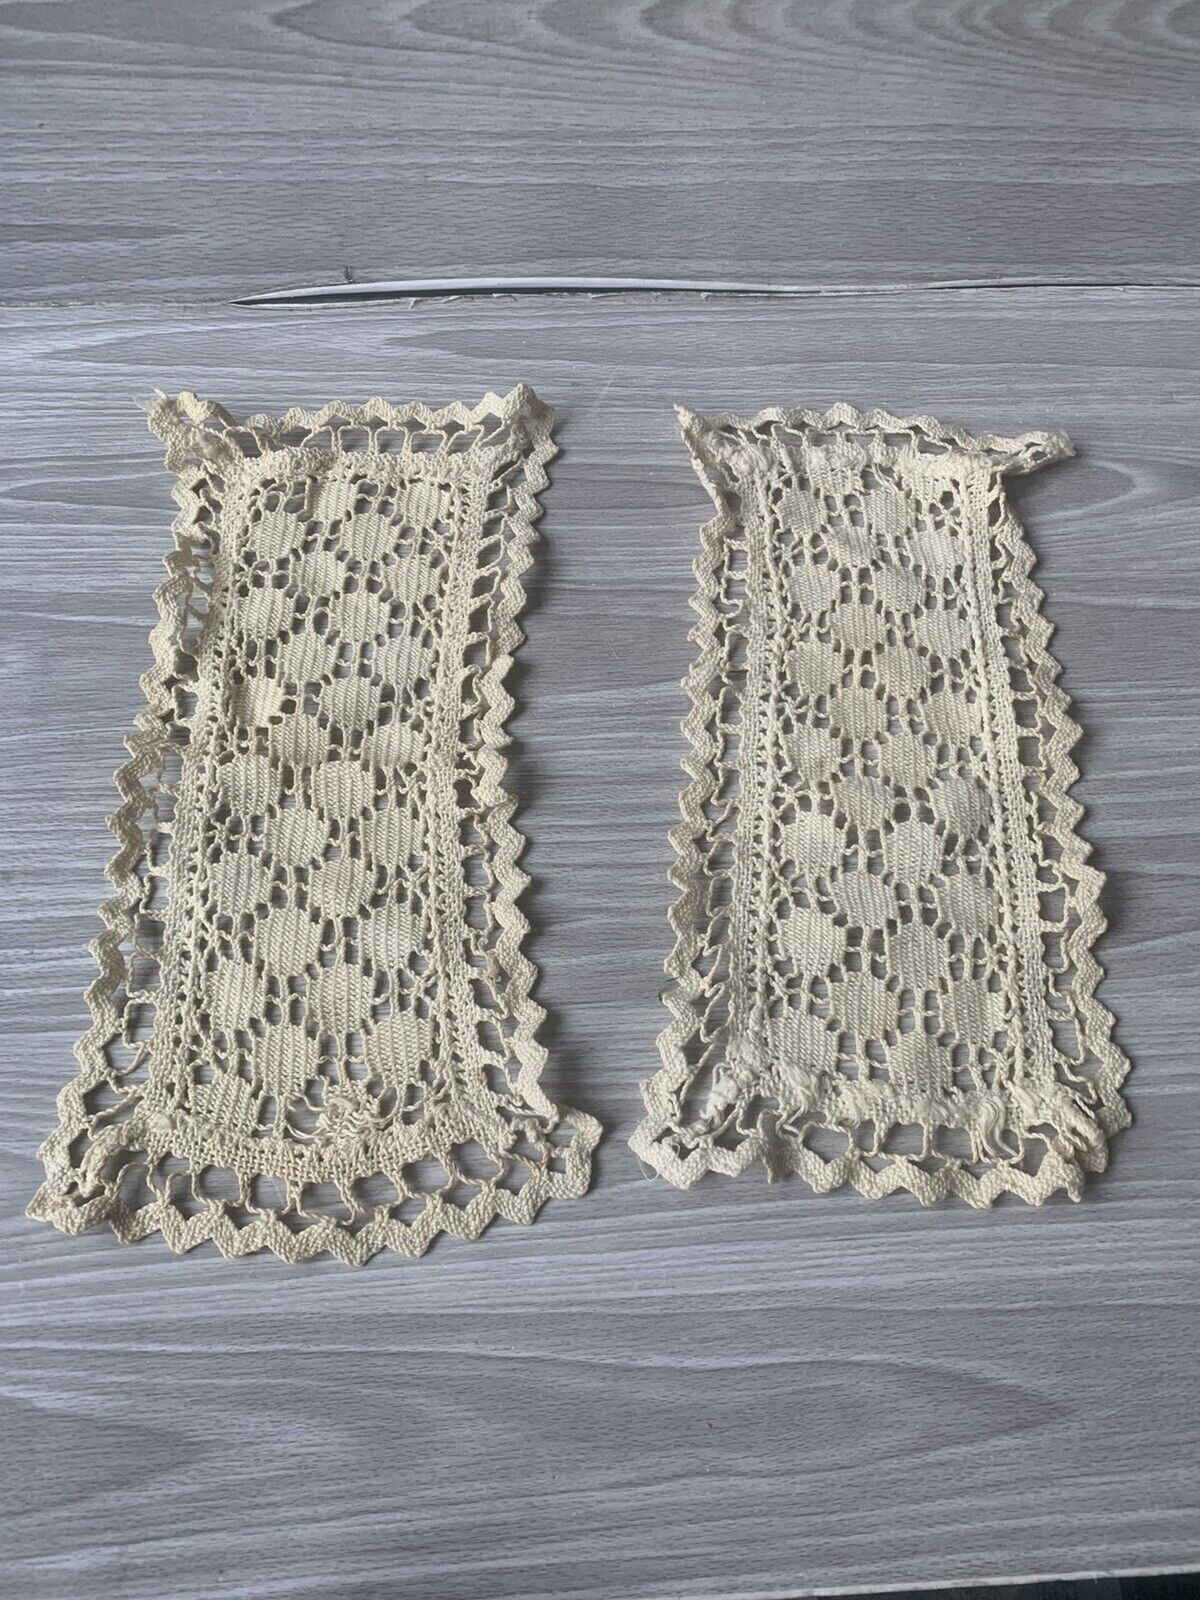 2 Vintage Handmade Crochet Lace Doily Doilies